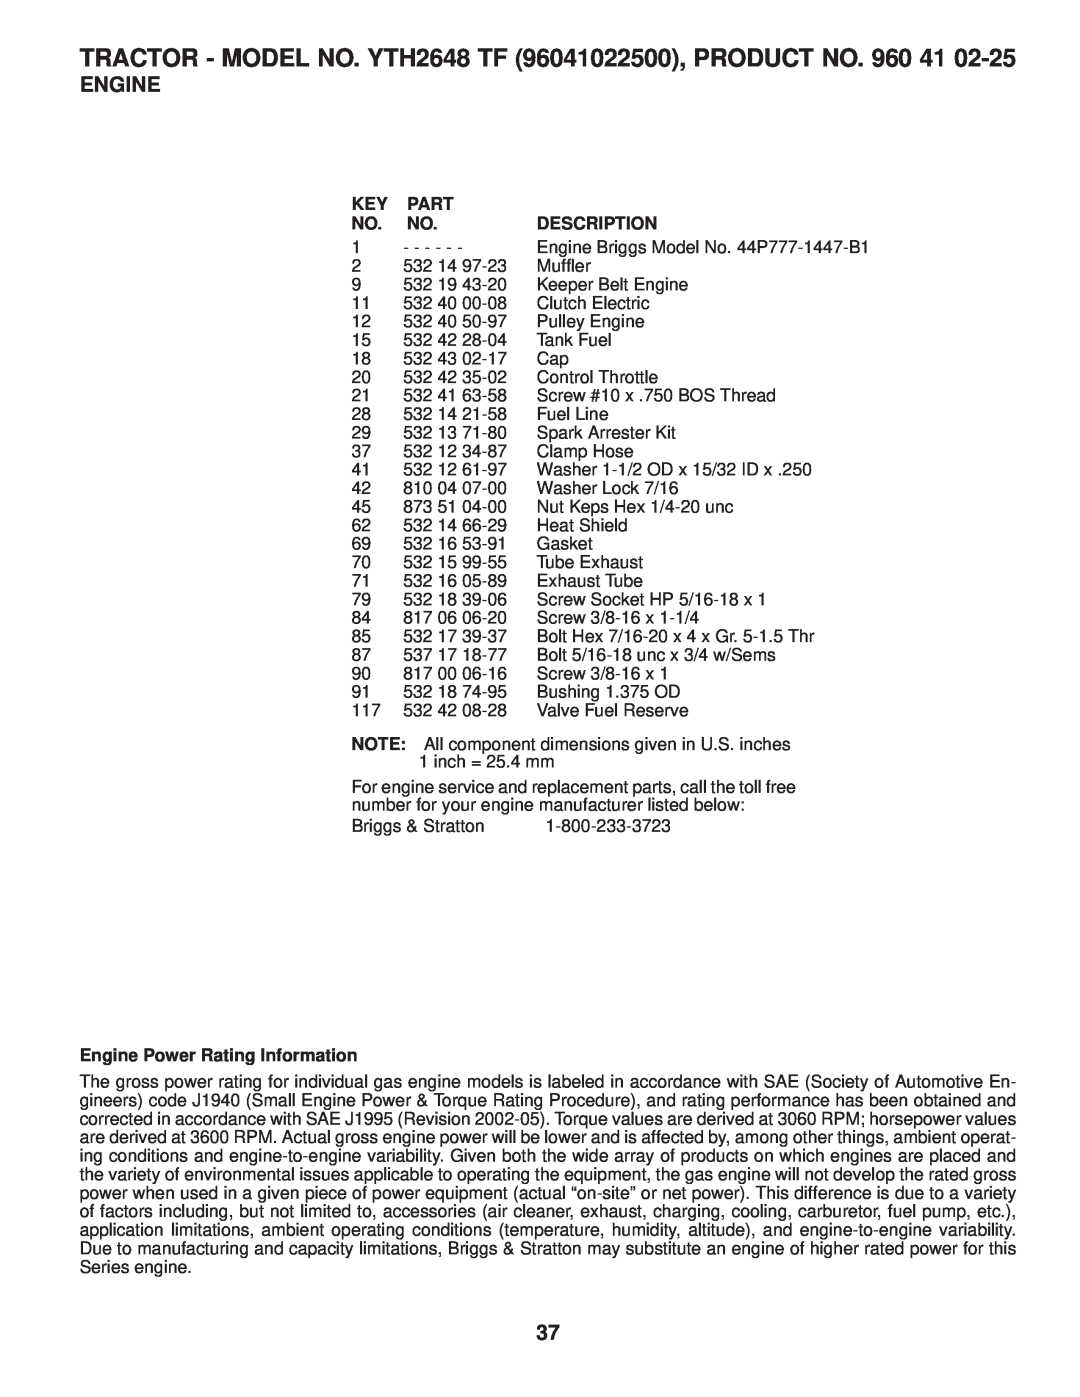 Husqvarna owner manual TRACTOR - MODEL NO. YTH2648 TF 96041022500, PRODUCT NO. 960, Engine, Part, Description 